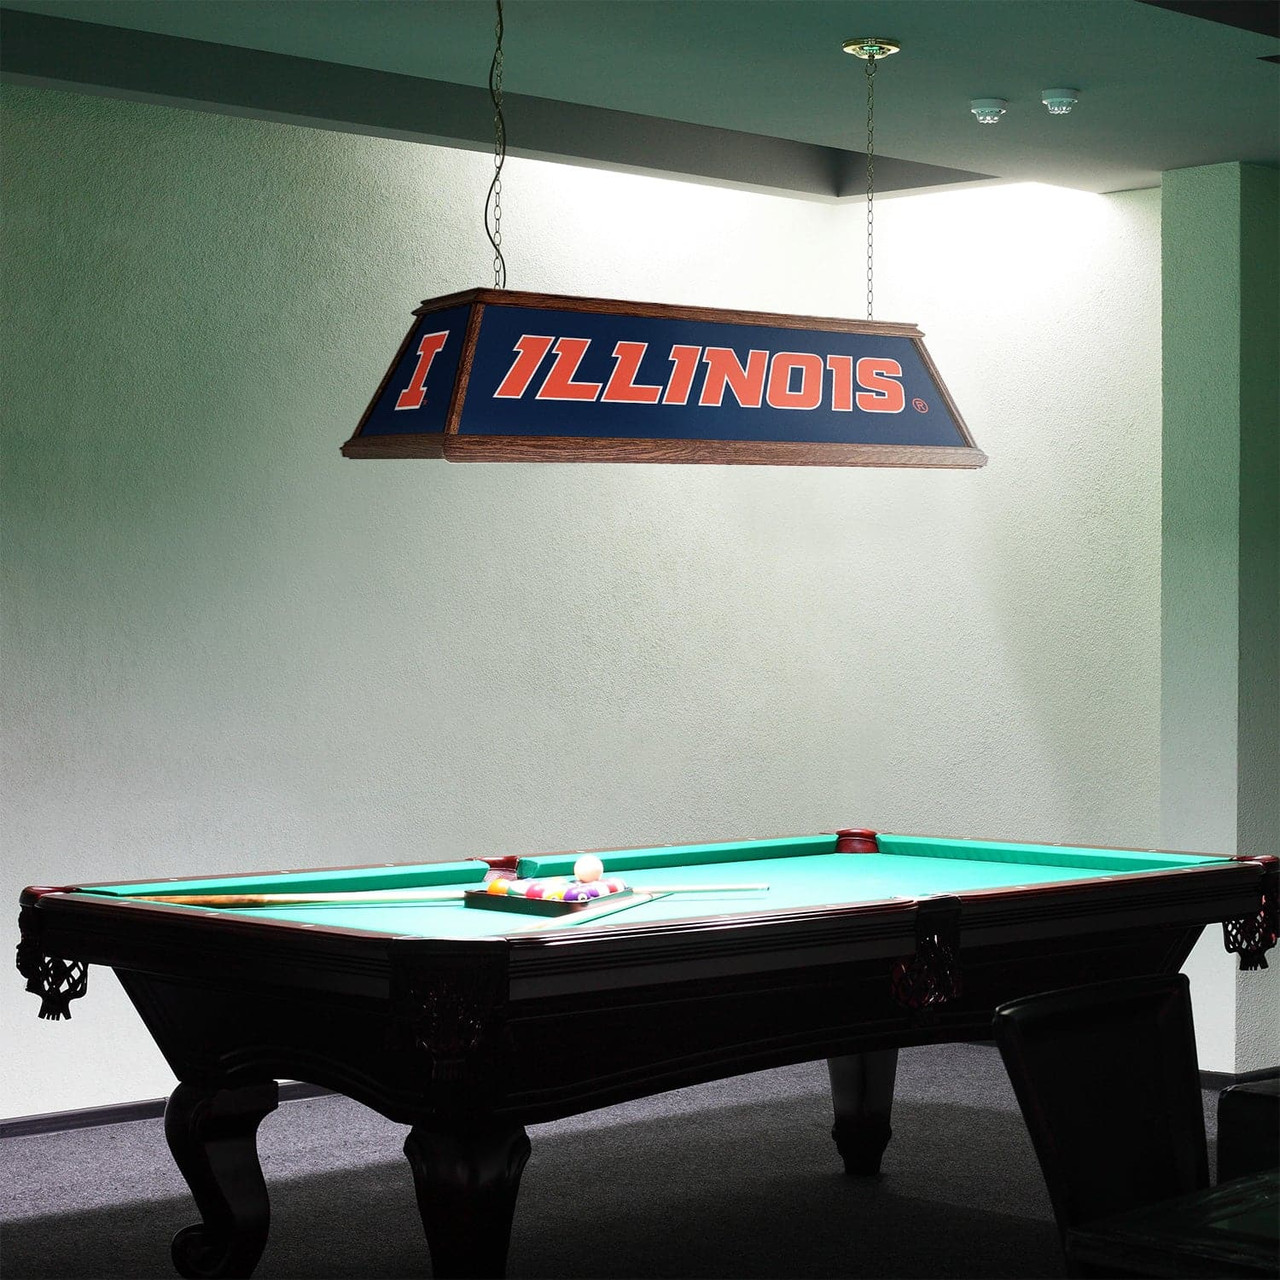 Illinois, Fighting, Illini, Premium, Wood, Billiard, Pool, Table, Light, Lamp, NCILLI-330-01A, NCILLI-330-01B, NCILLI-330-01C, The Fan-Brand, 687747754283